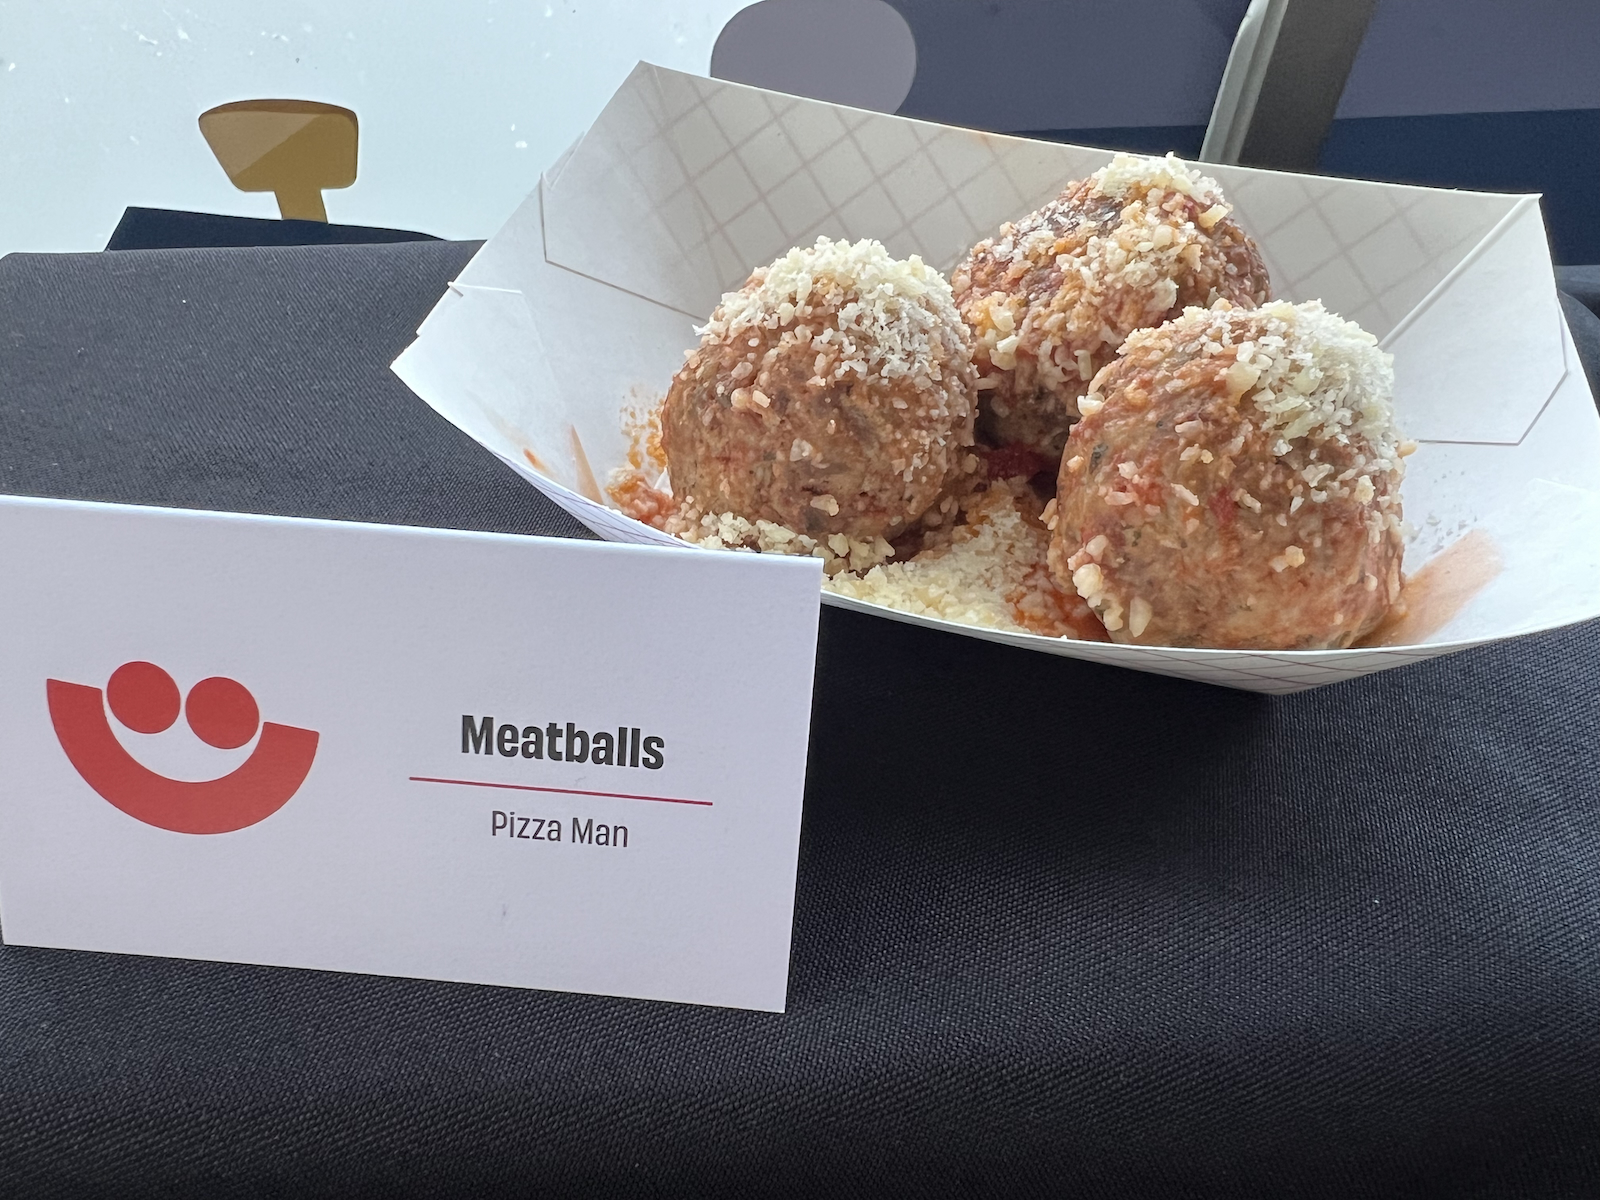 Pizza Man Meatballs